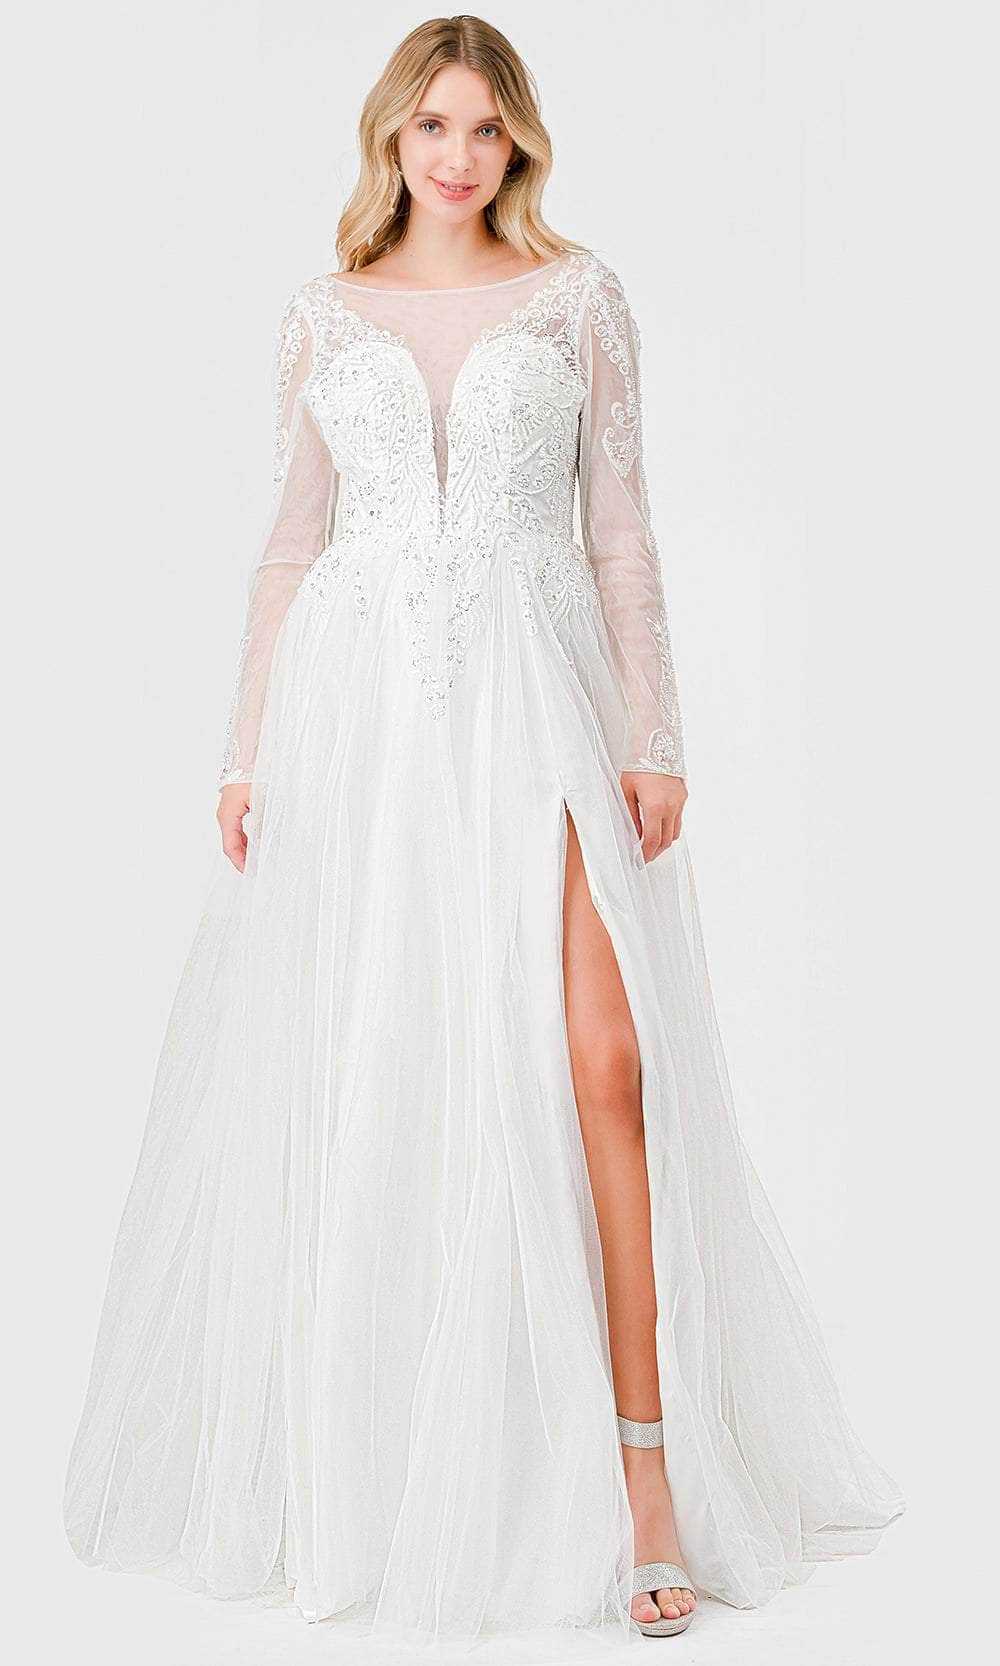 Aspeed Design, Aspeed Design MS0033 - Illusion Bateau Embellished Bridal Dress